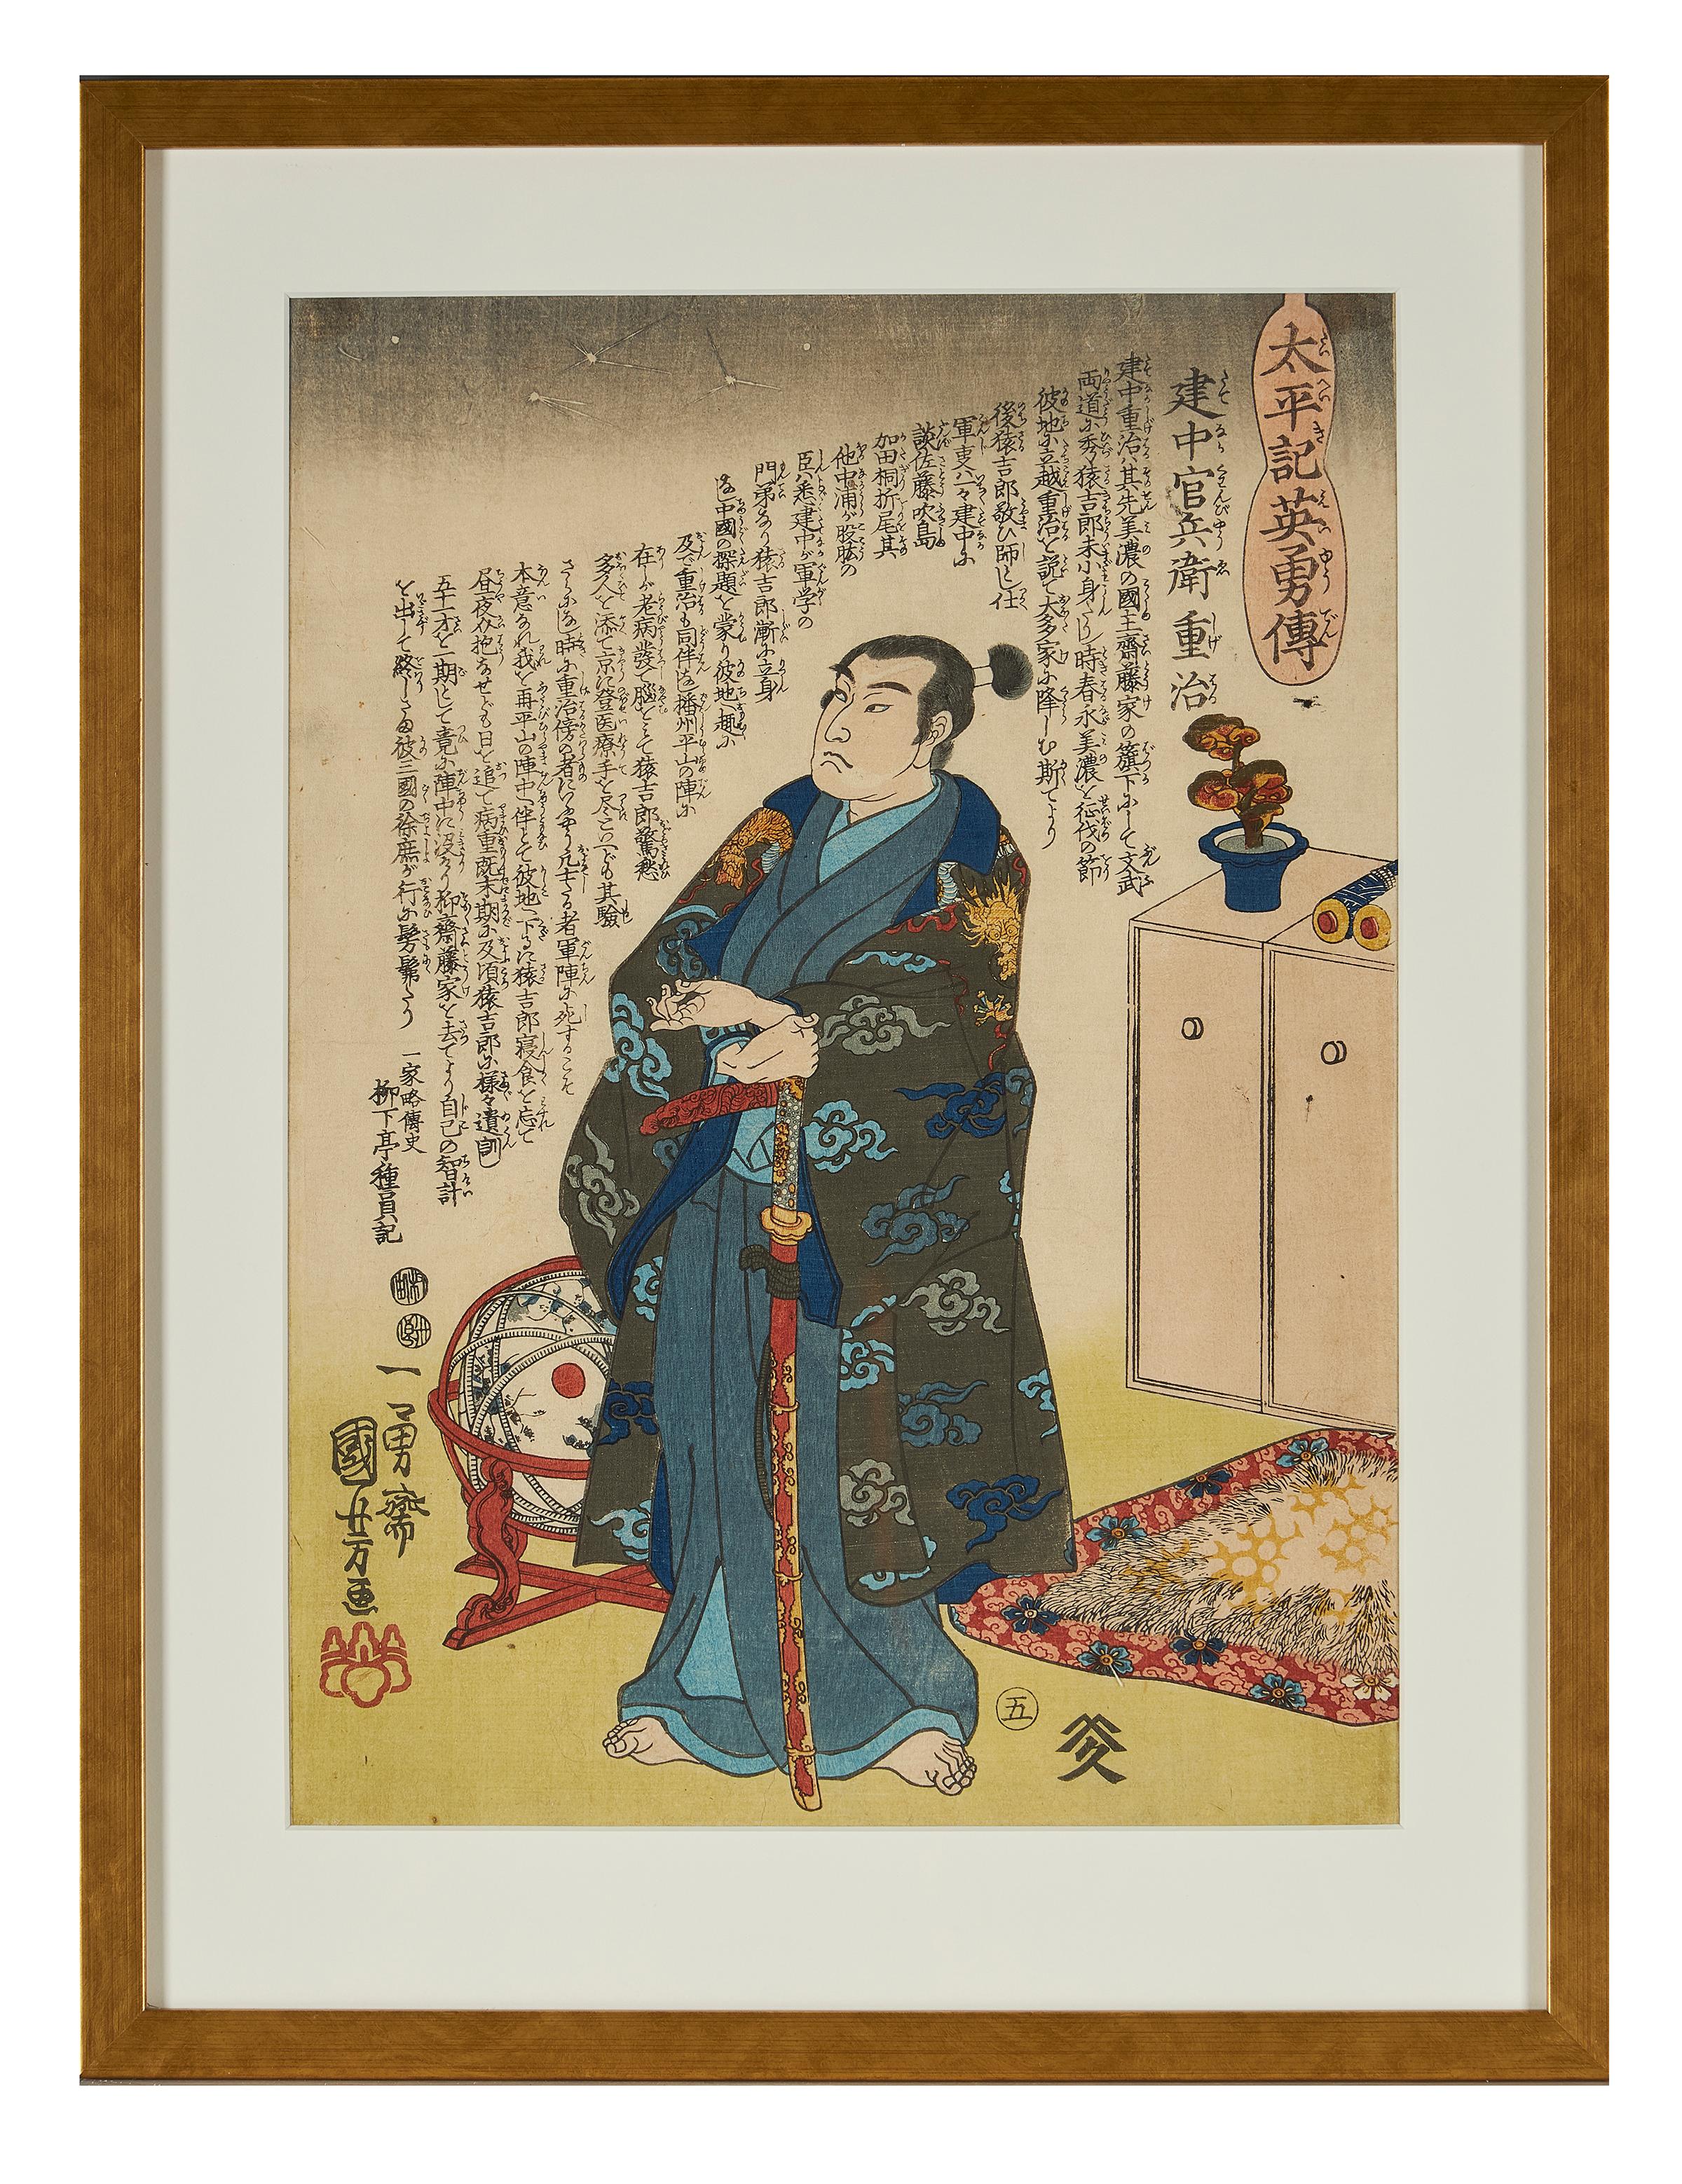 Neuf estampes sur bois japonaises d'Utagawa Kuniyoshi en vente 7